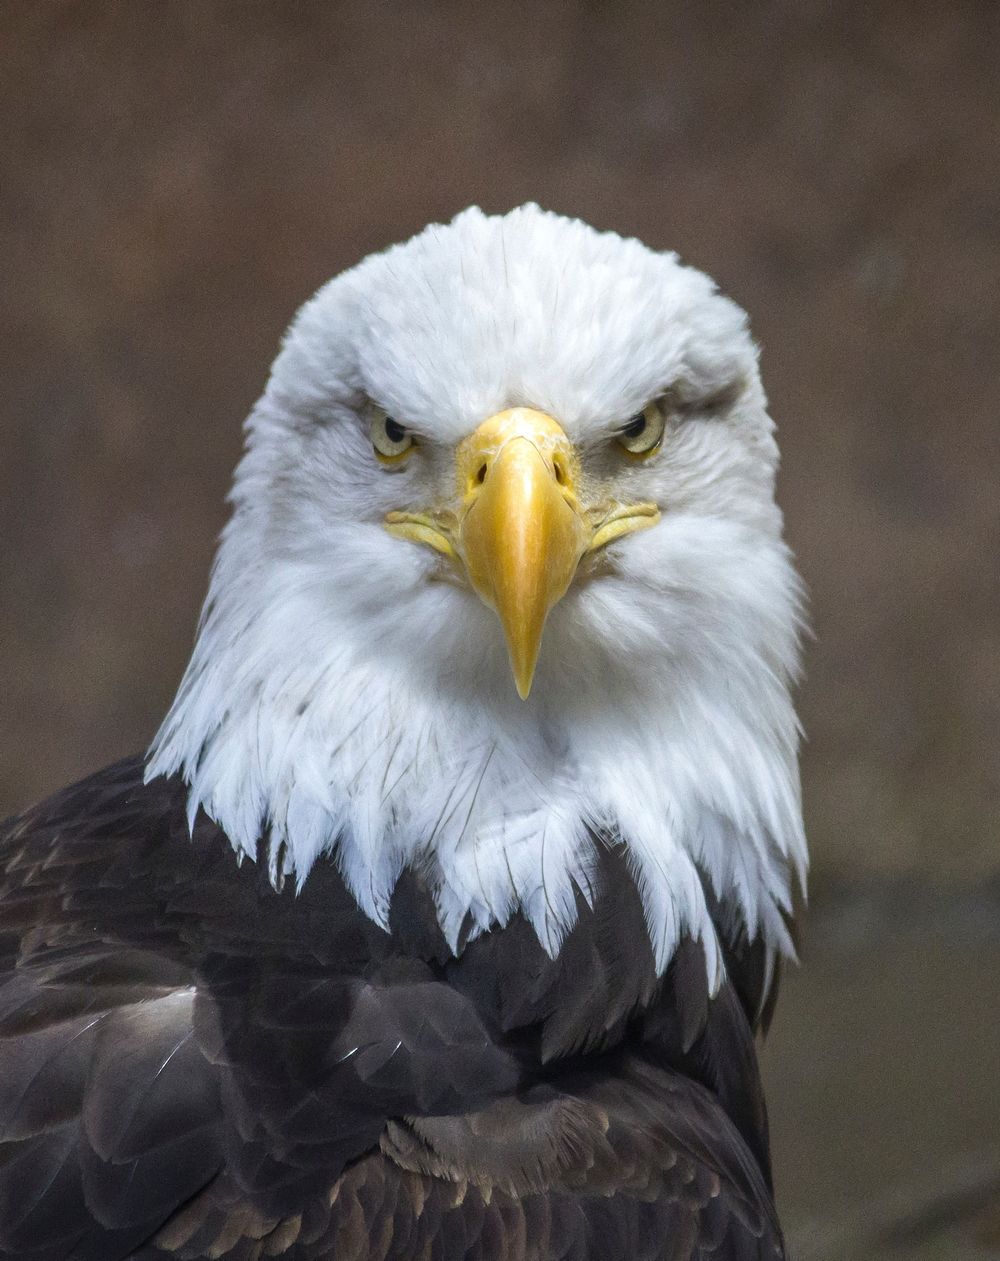 Free bald eagle head close up portrait photo, public domain animal CC0 image.